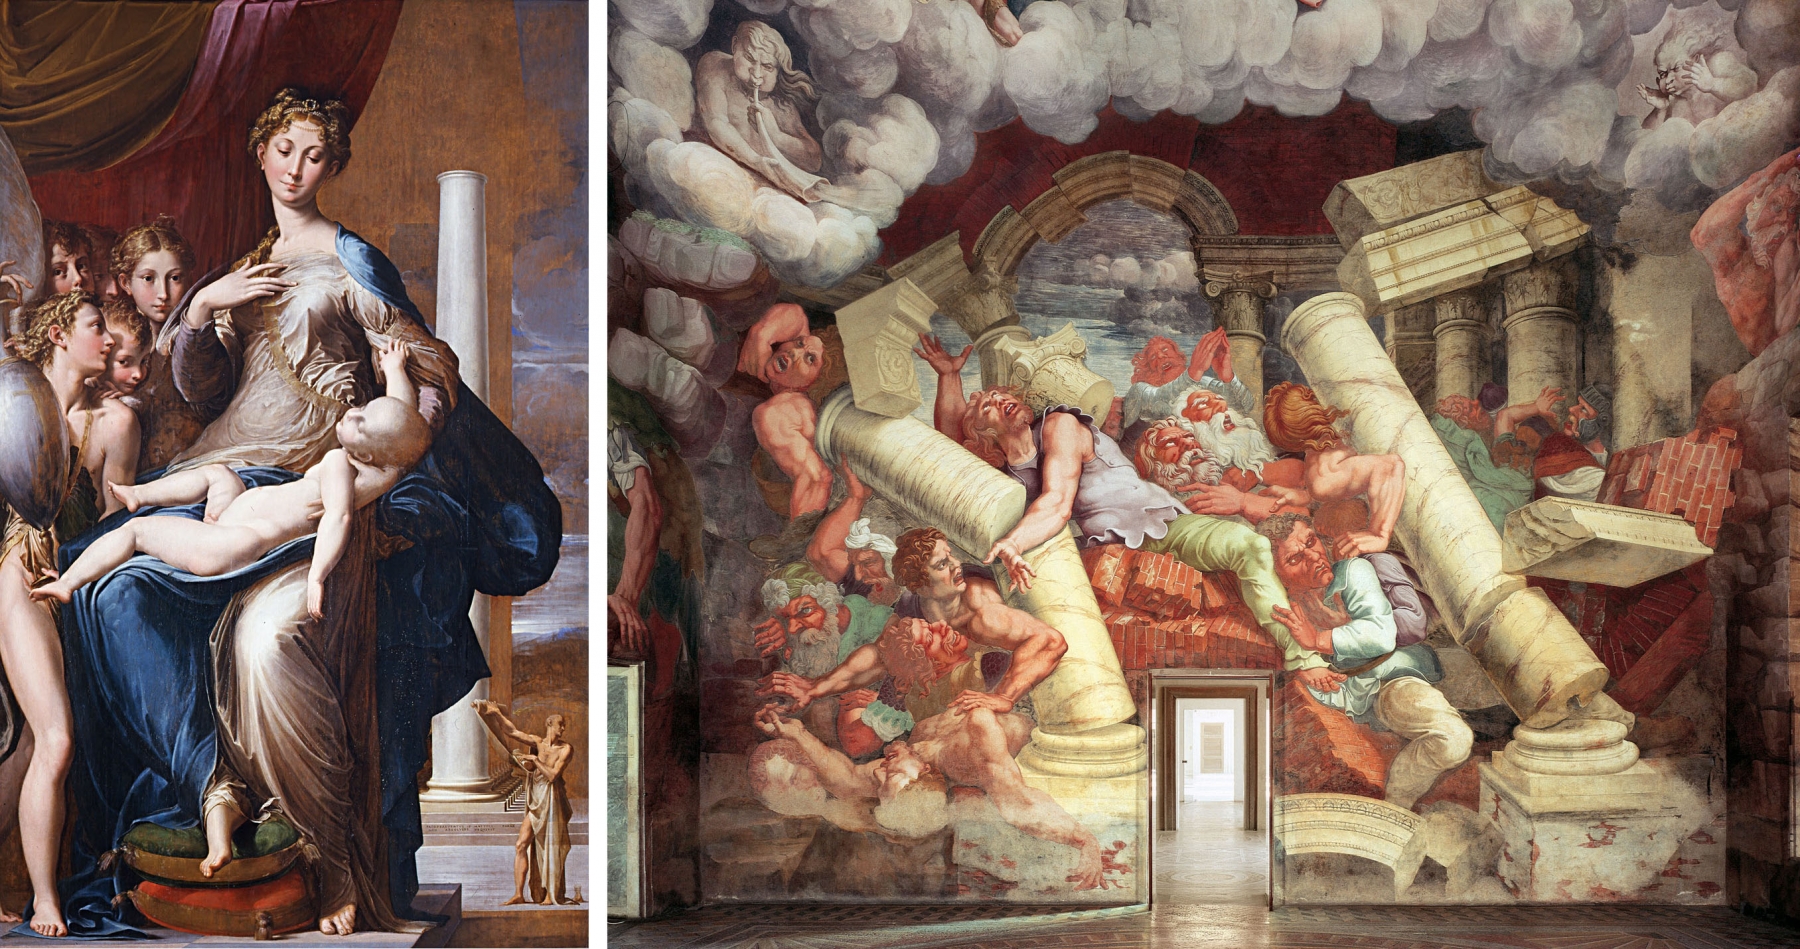 Left: Parmigianino, &ldquo;The Madonna with the Long Neck (Italian: Madonna dal collo lungo)&rdquo;, 1535 - 1540

Oil on wood, 85 x 52 inches (216 cm x 132 cm)
Collection: Galleria degli Uffizi, Florence

&nbsp;

Right: Giulio Romano, &quot;La&nbsp;Ca&iacute;da de los Gigantes (The Fall of the Giants)&quot;, 1532 - 1535

Fresco

Tea Palace, Mantua&nbsp;

&nbsp;

&nbsp;